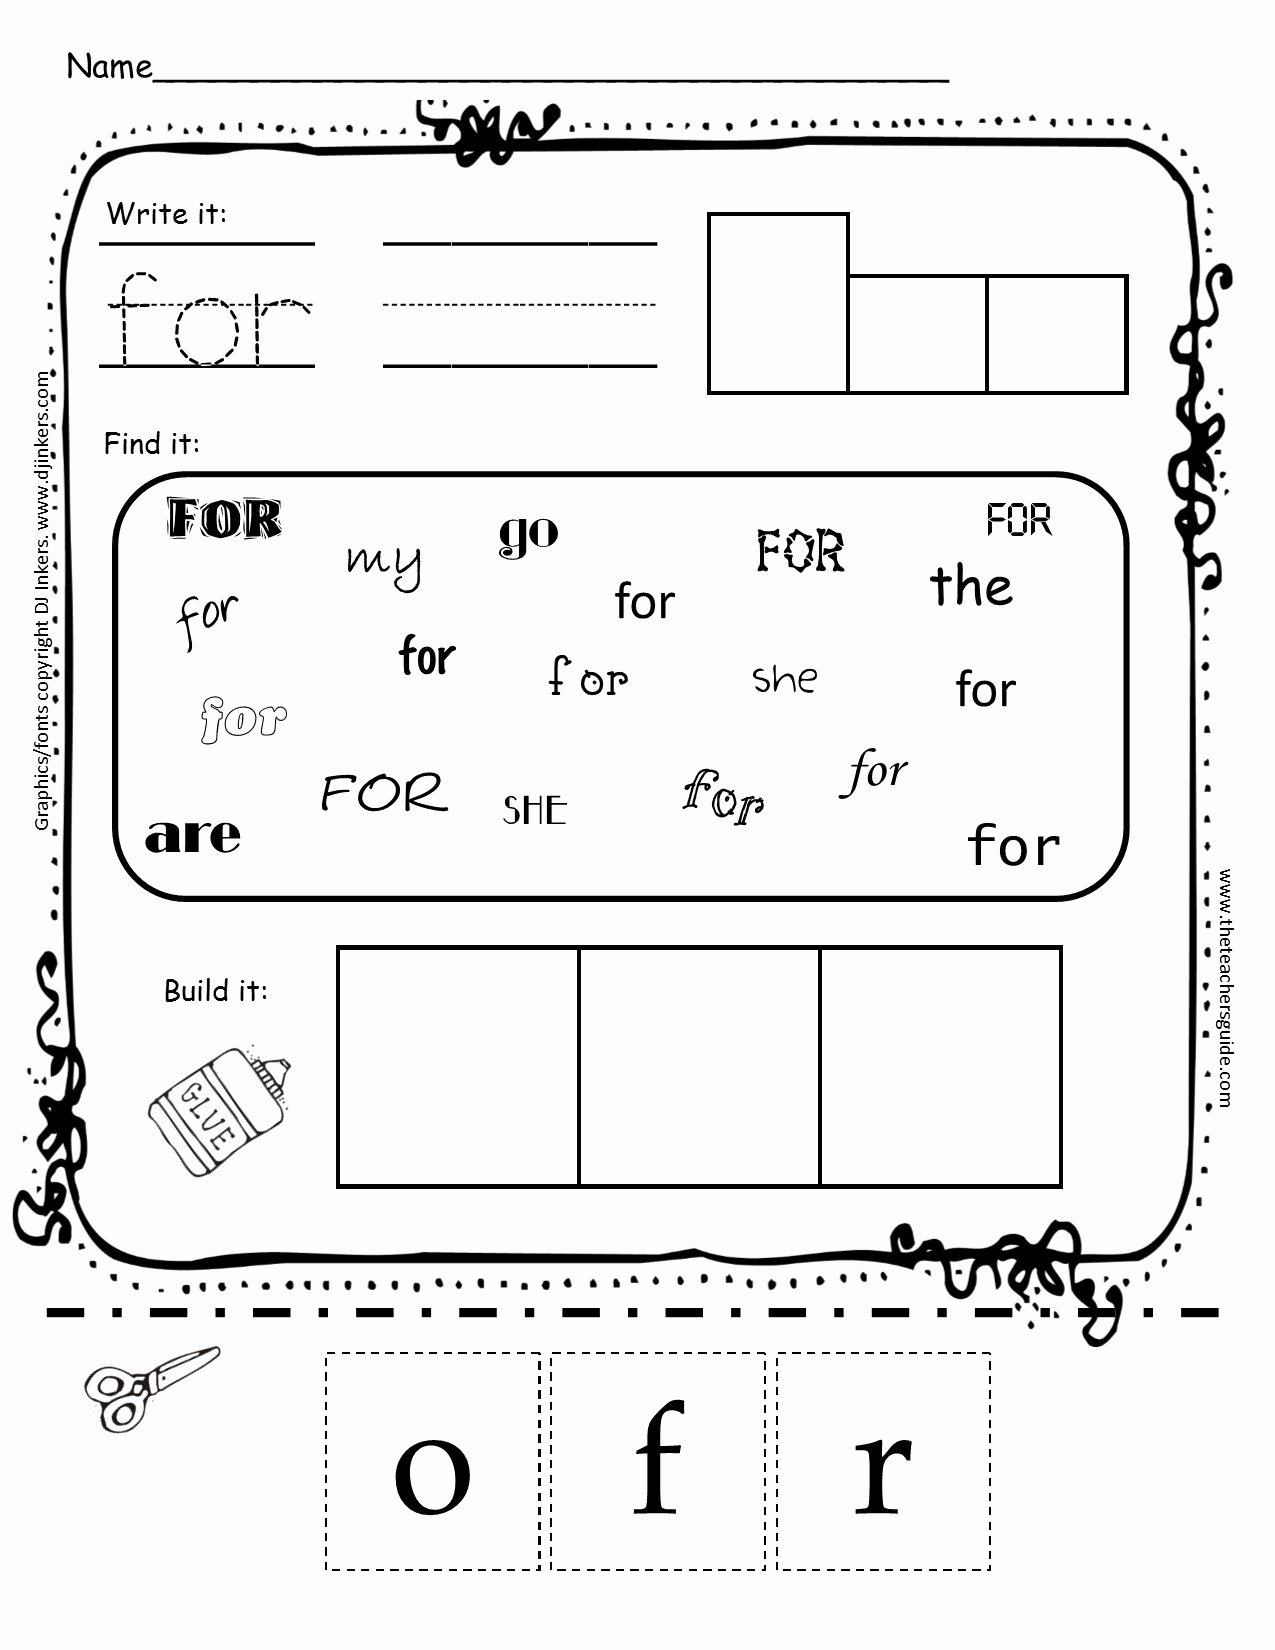 Sight Words Worksheet for Kindergarten Beautiful Kindergarten Sight Word Printouts From the Teacher S Guide